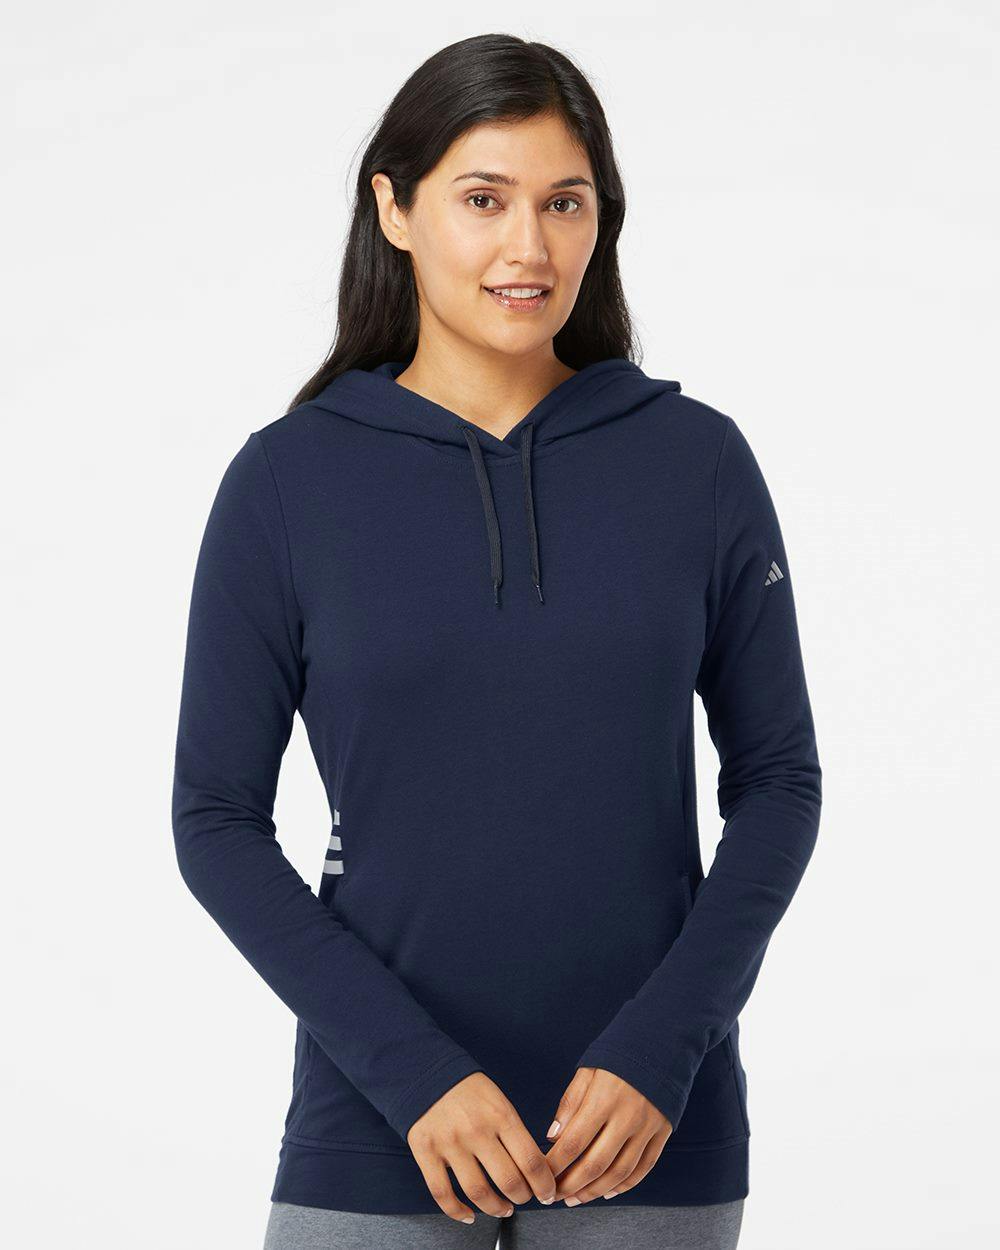 Image for Women's Lightweight Hooded Sweatshirt - A451